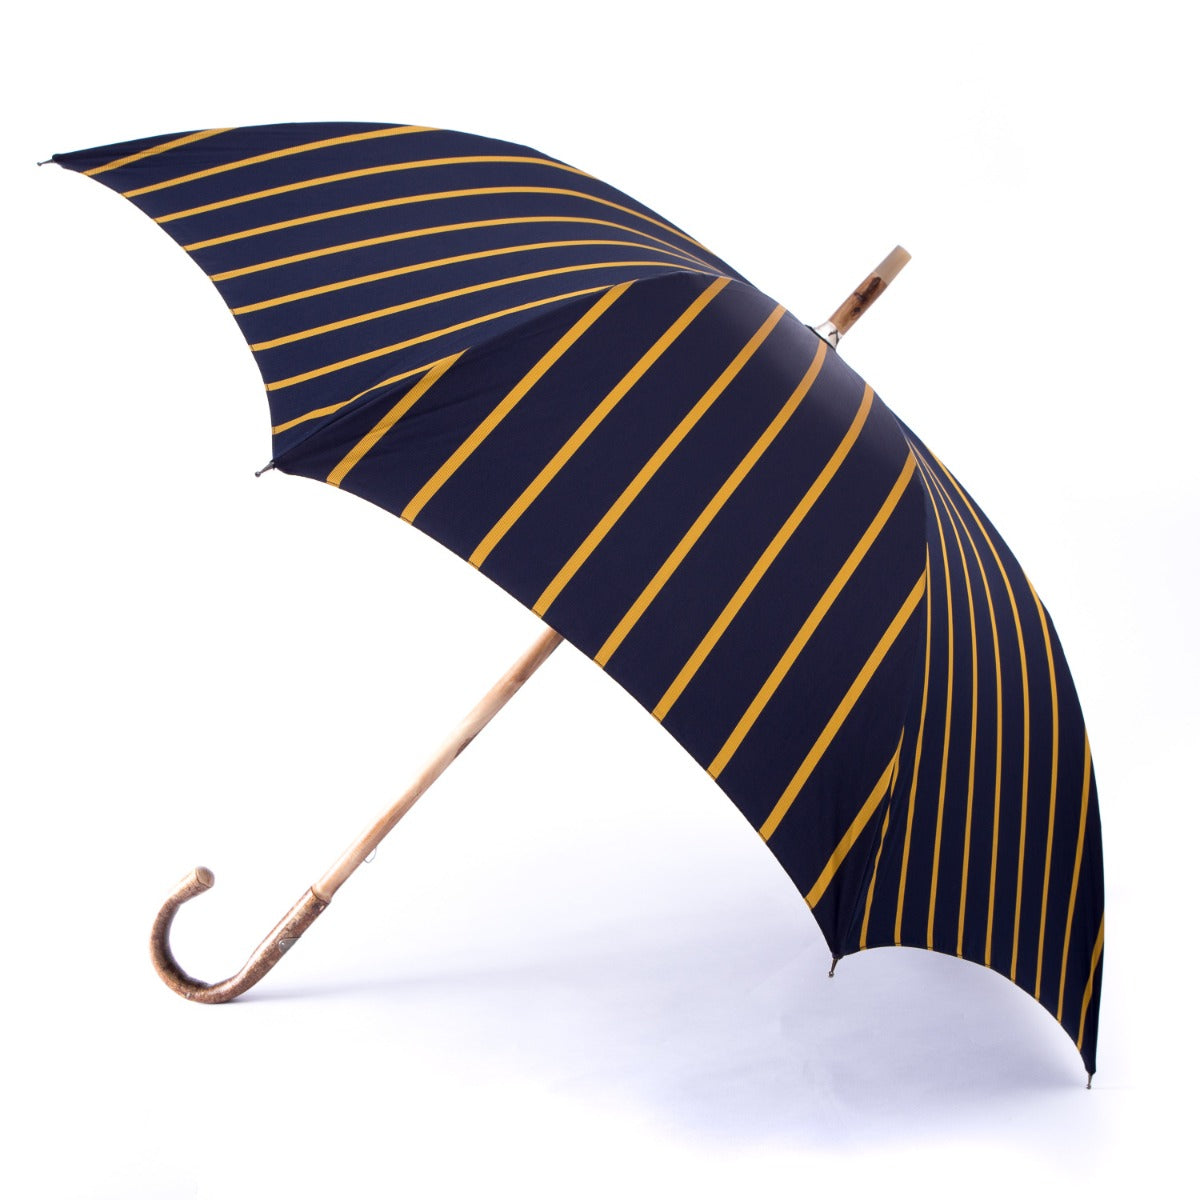 A handmade Walnut Solid Stick Umbrella with Navy Stripe Canopy from KirbyAllison.com.